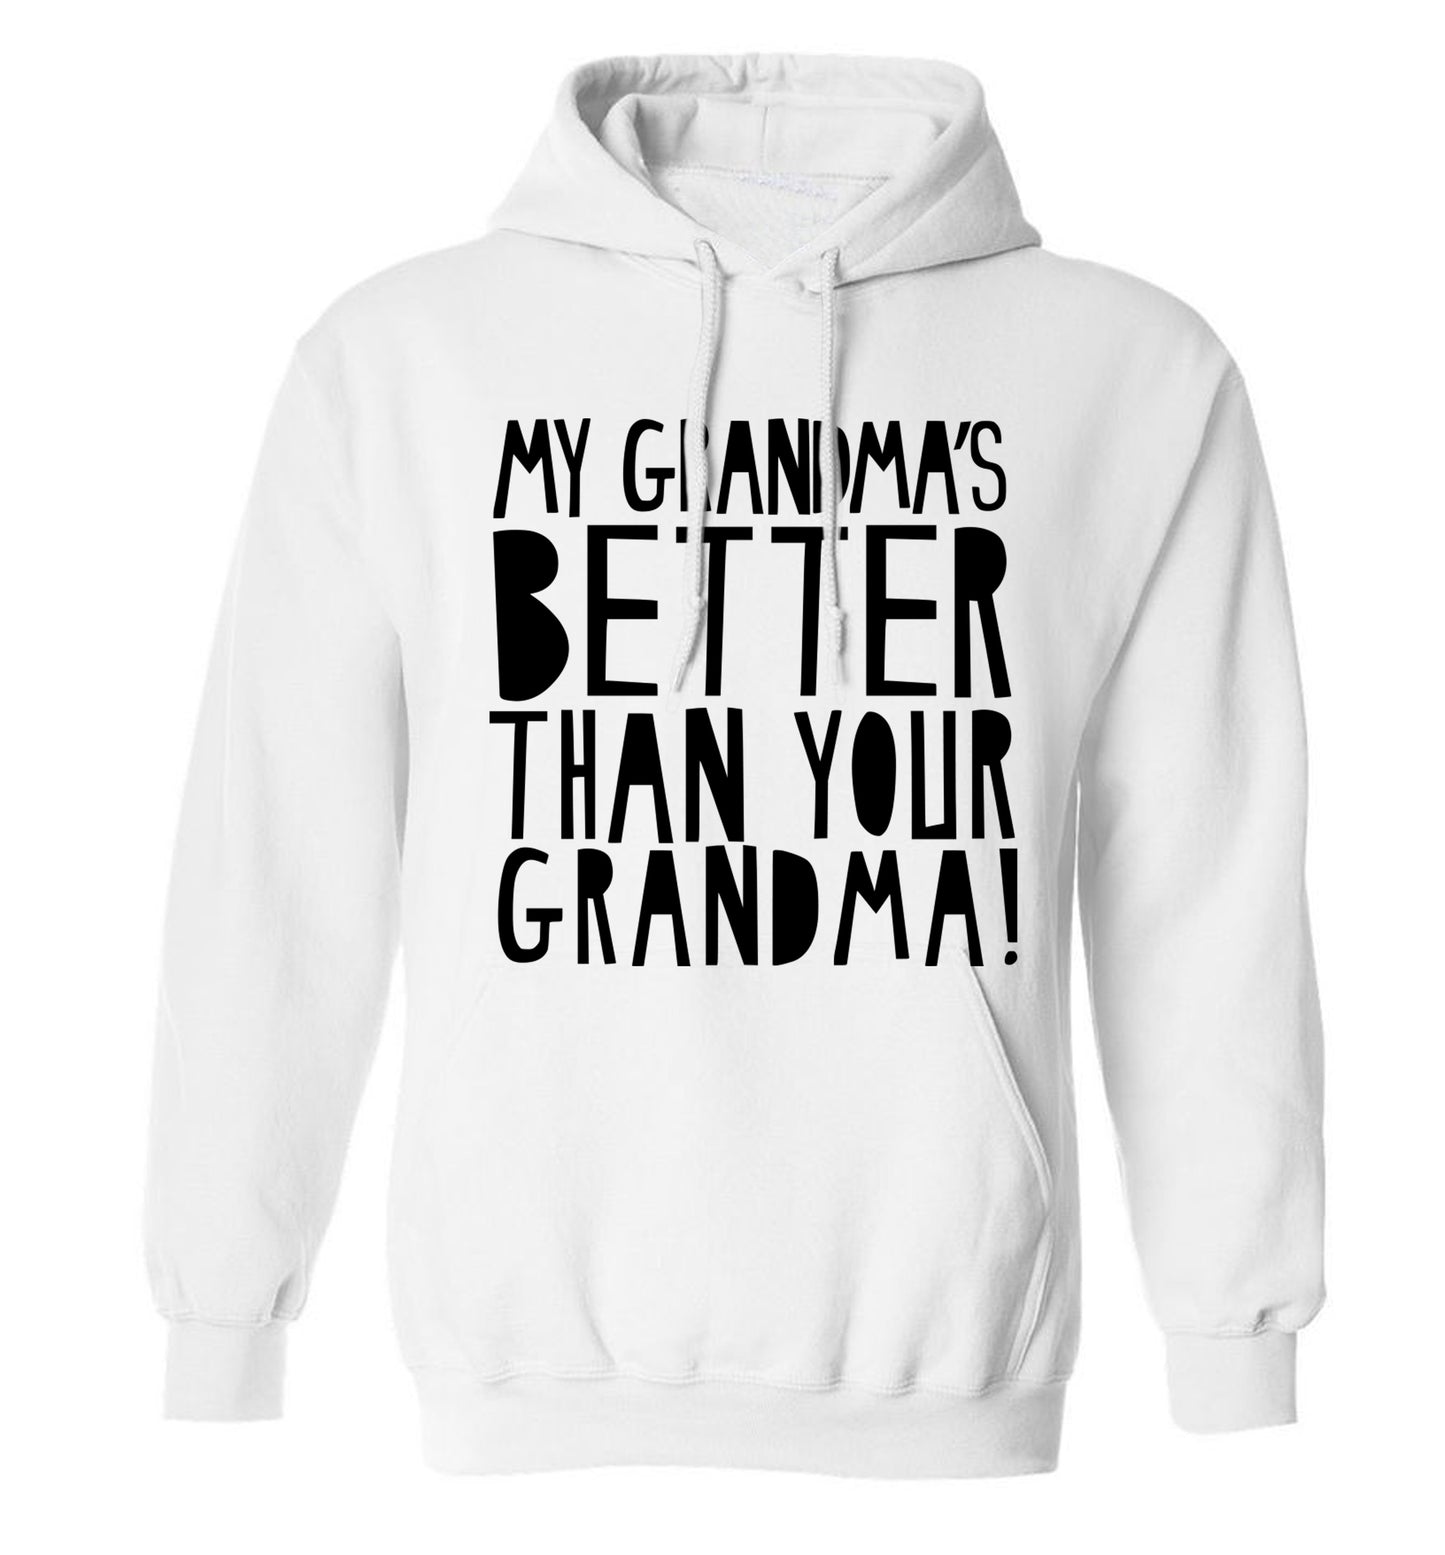 My grandma's better than your grandma adults unisex white hoodie 2XL